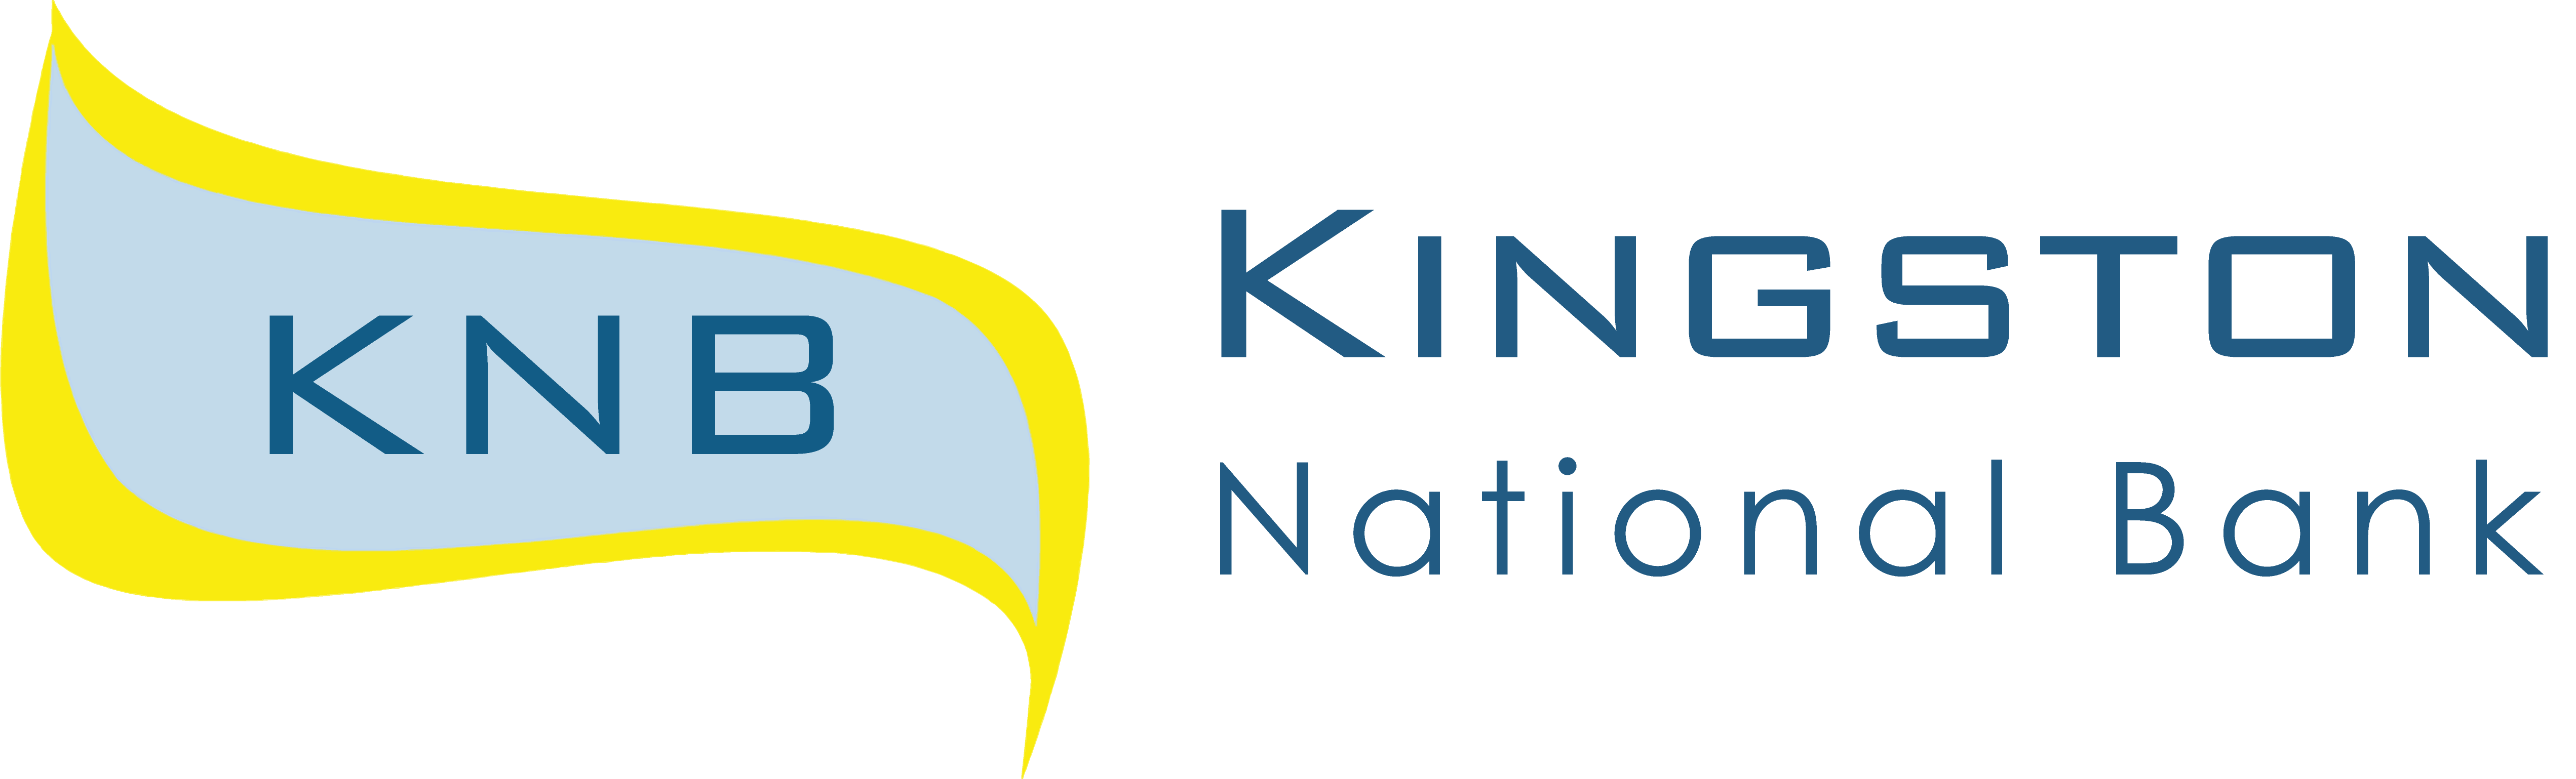 Kingston National Bank Logo - Mobile